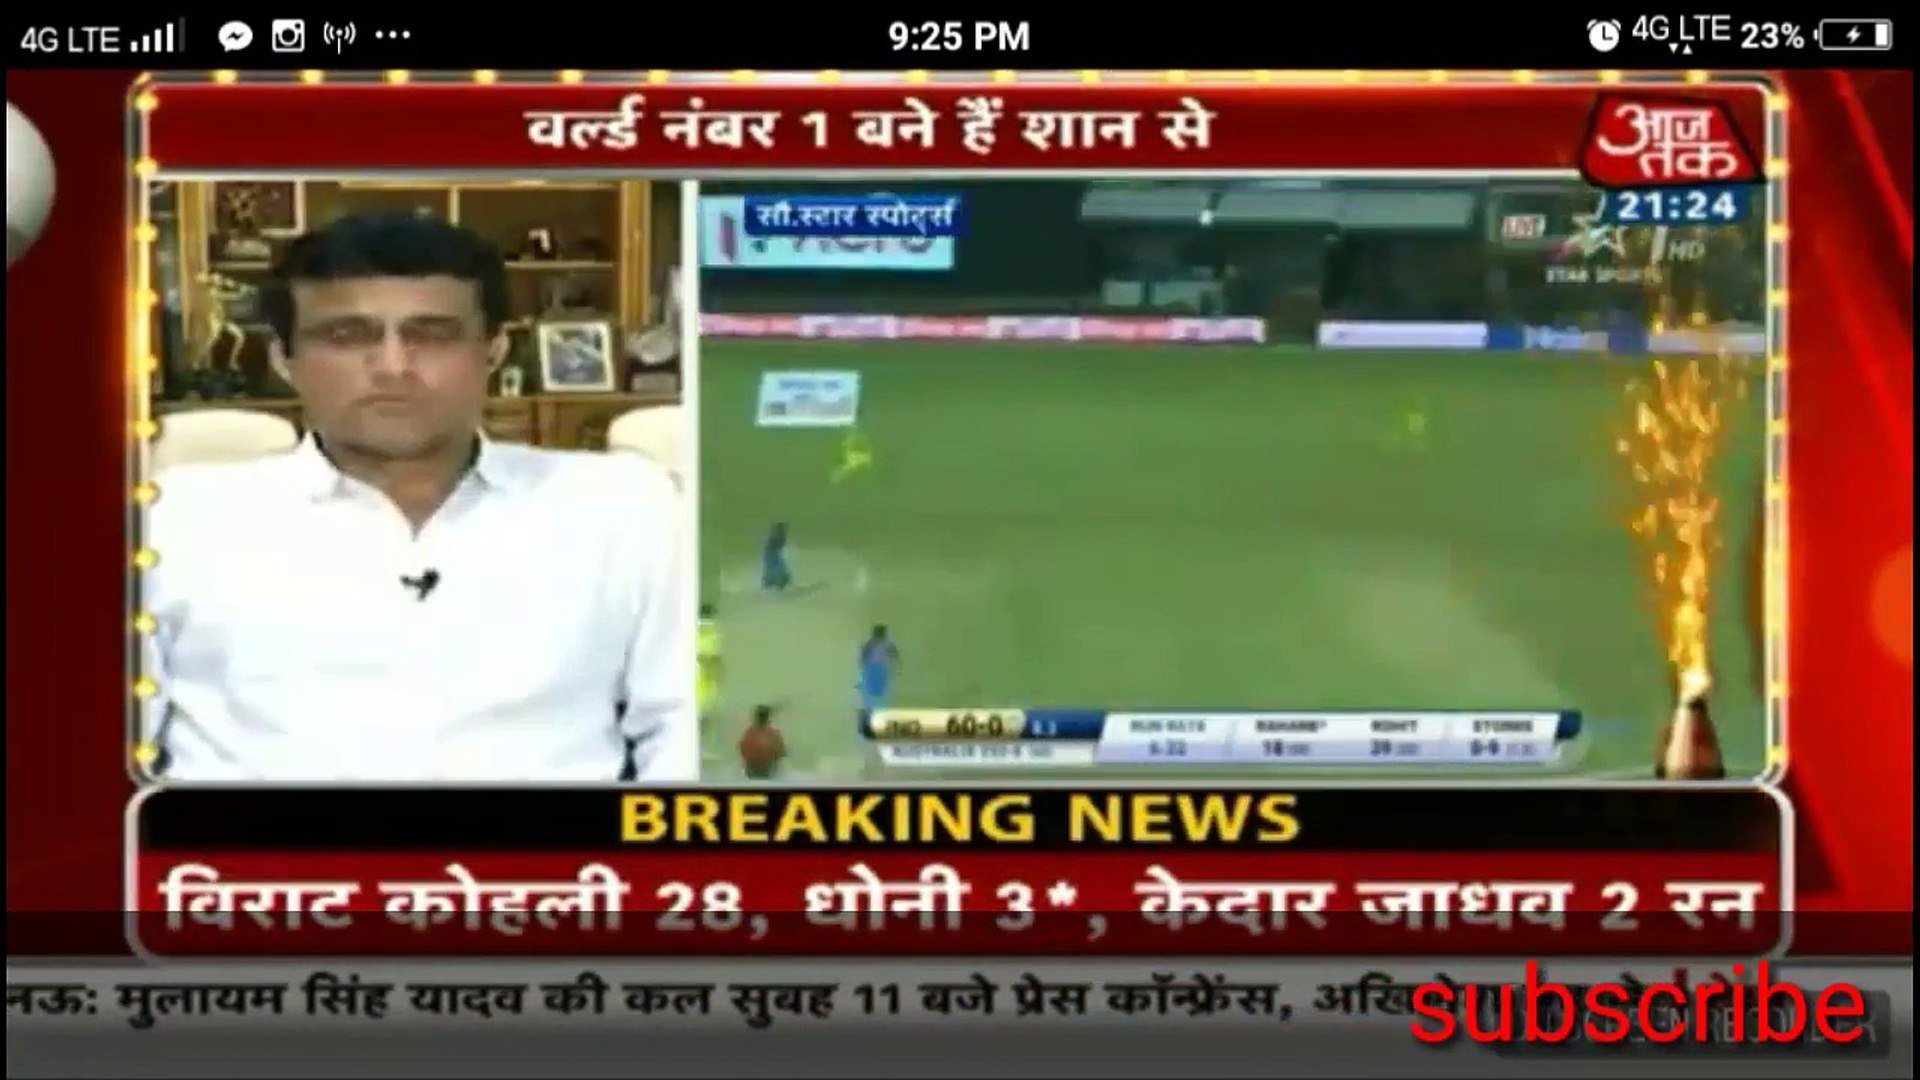 India vs Australia 3rd odi full highlights Sports cricket News review Aaj tak